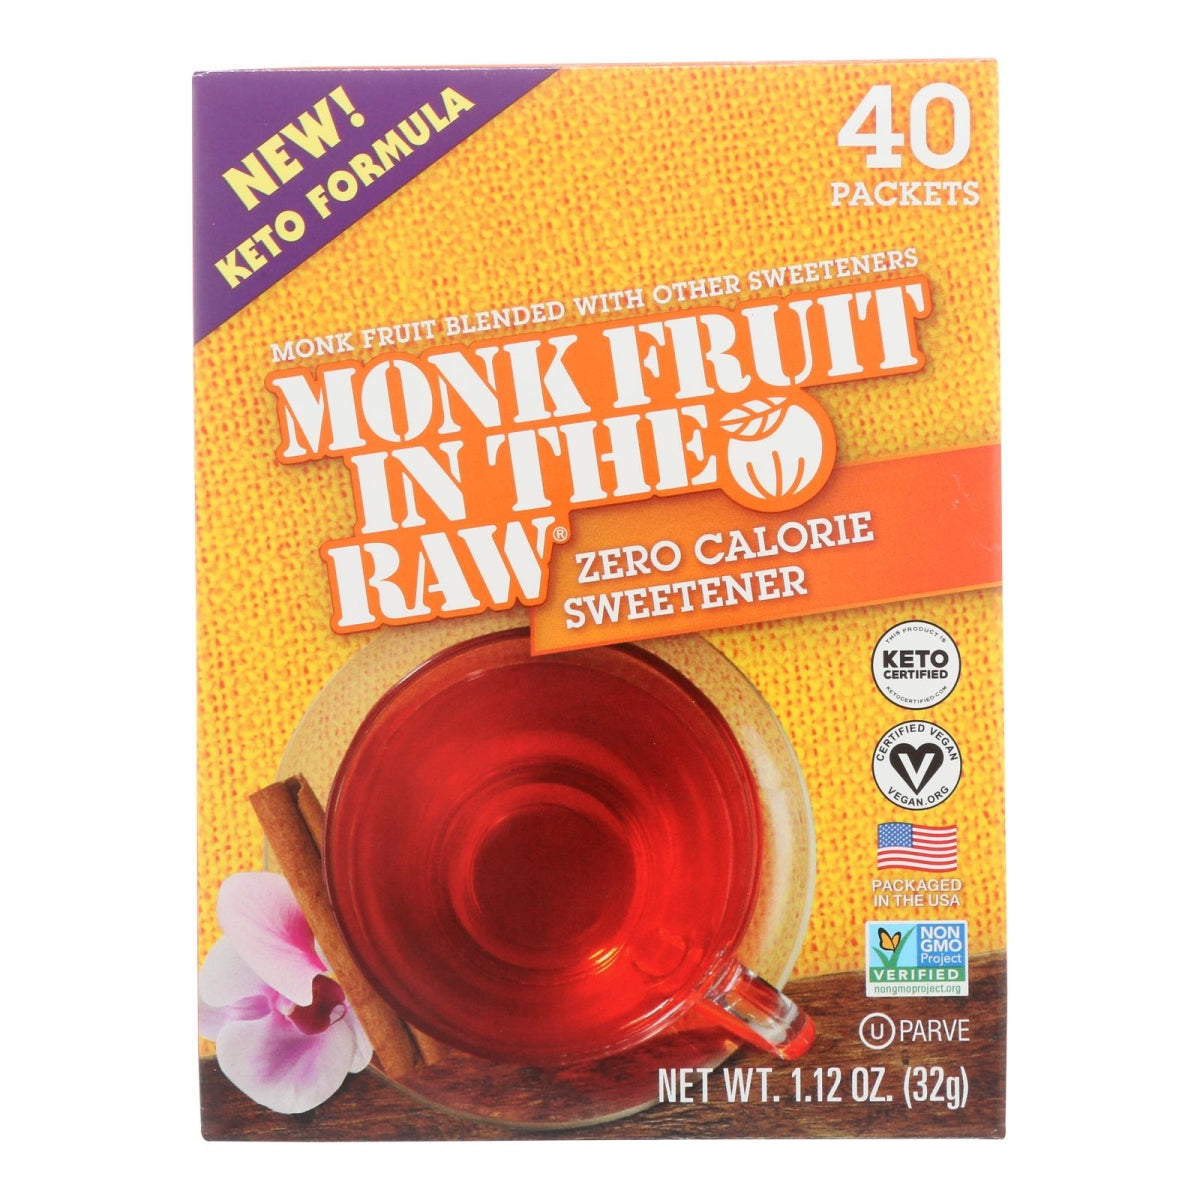 [Lot of 2] MONK FRUIT IN THE RAW Keto-Certified Zero Calorie Sweetener 80 Packs